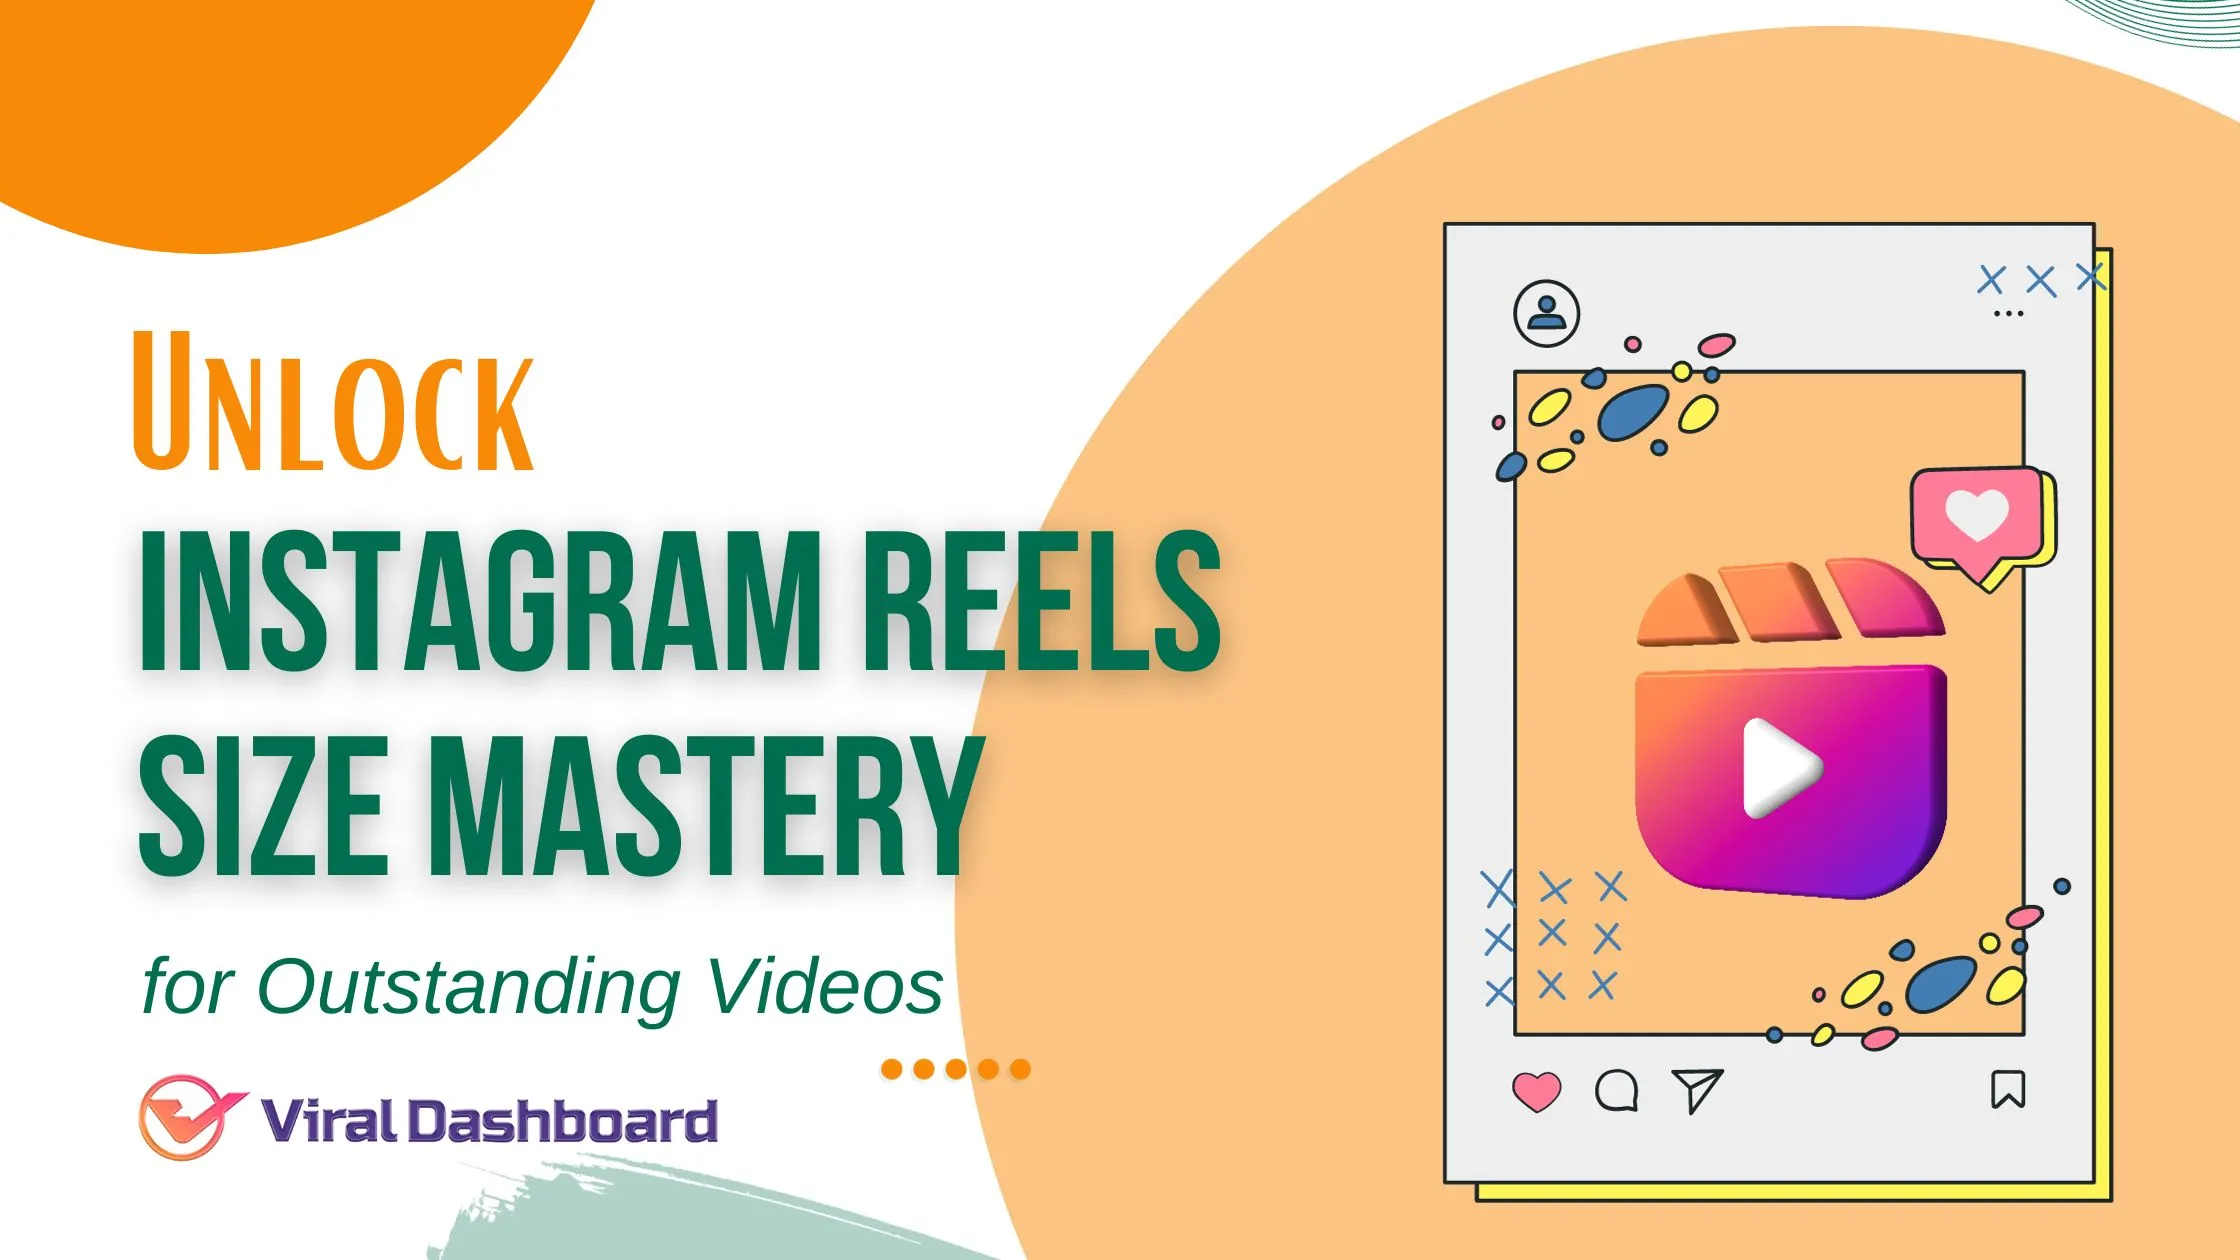 Unlock Instagram Reels Size Mastery for Outstanding Videos